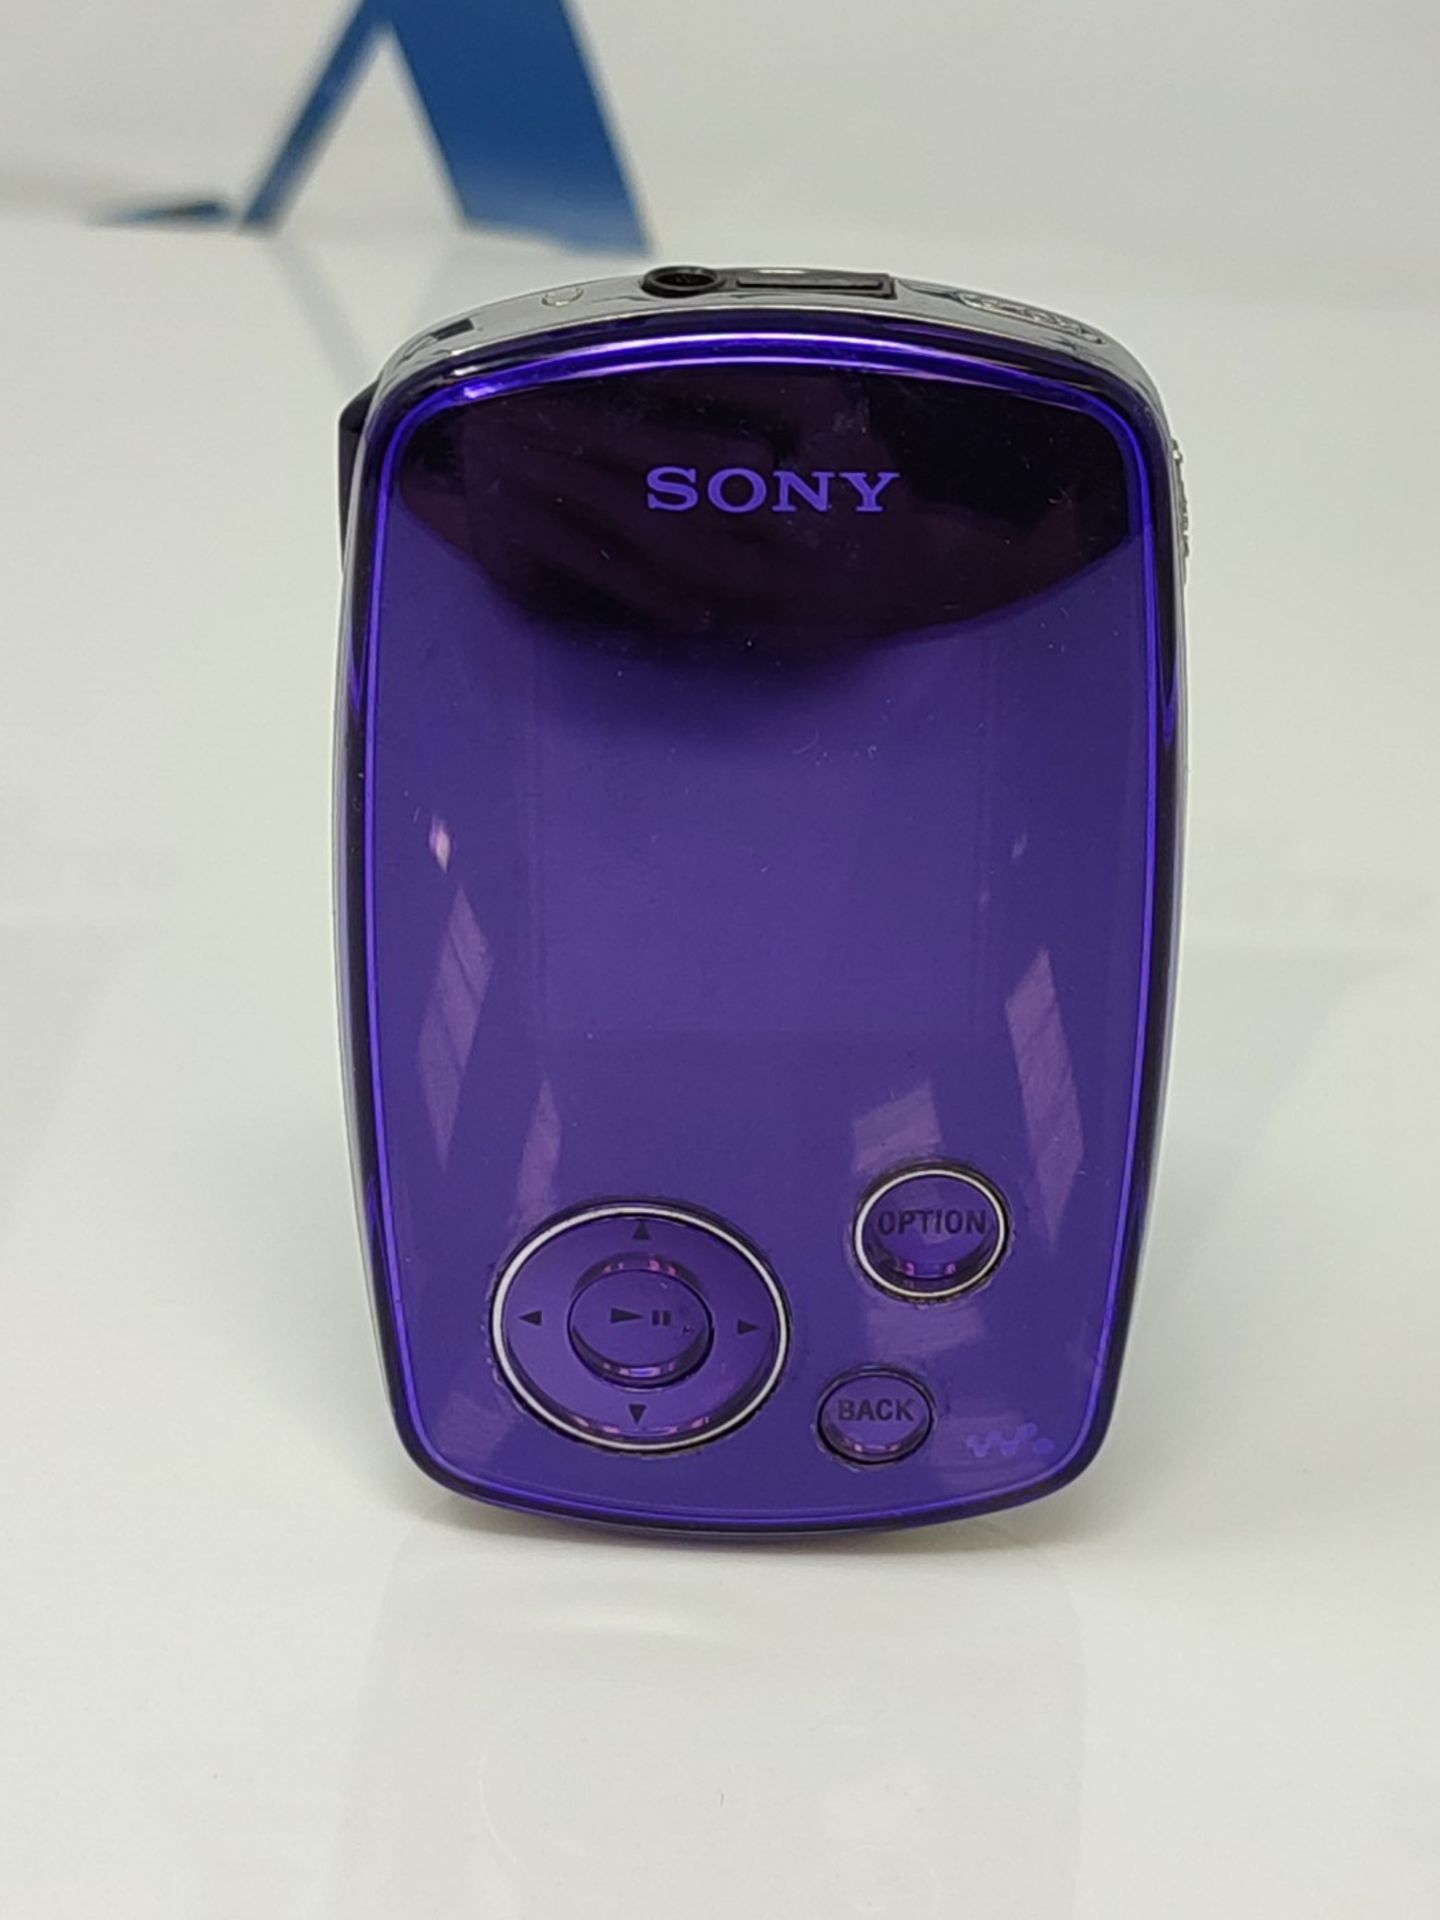 Sony Walkman NW-A1000 (6GB) Digital Media Player - Image 2 of 3